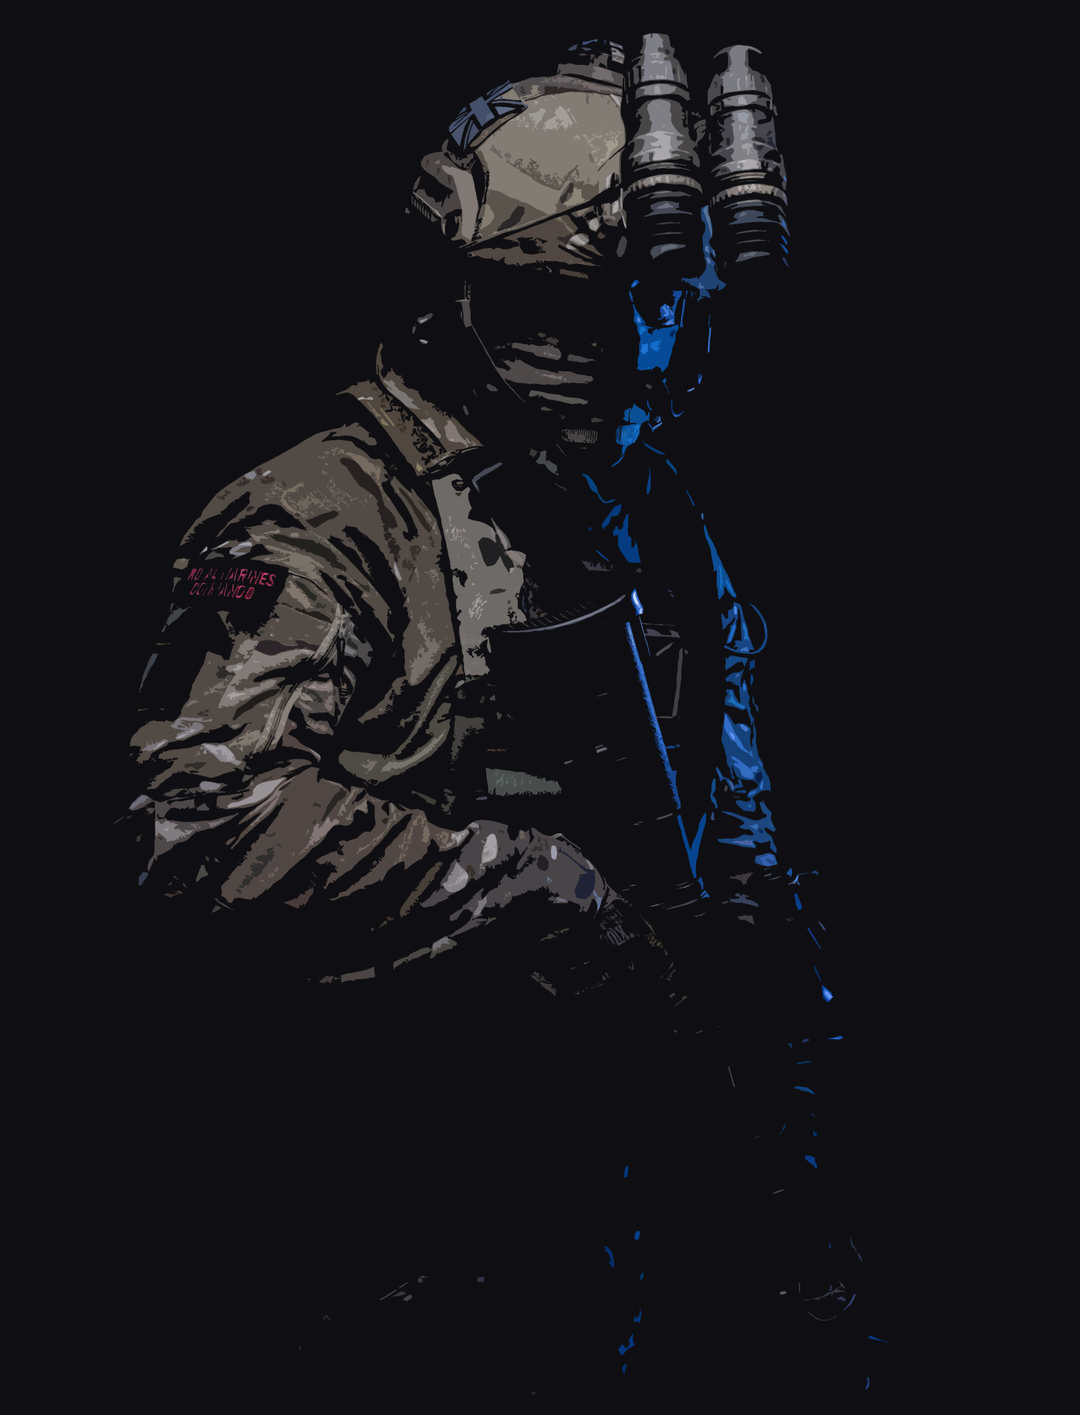 Royal Marines Commando in the dark artwork Print - Canvas - Framed Print - Hampshire Prints